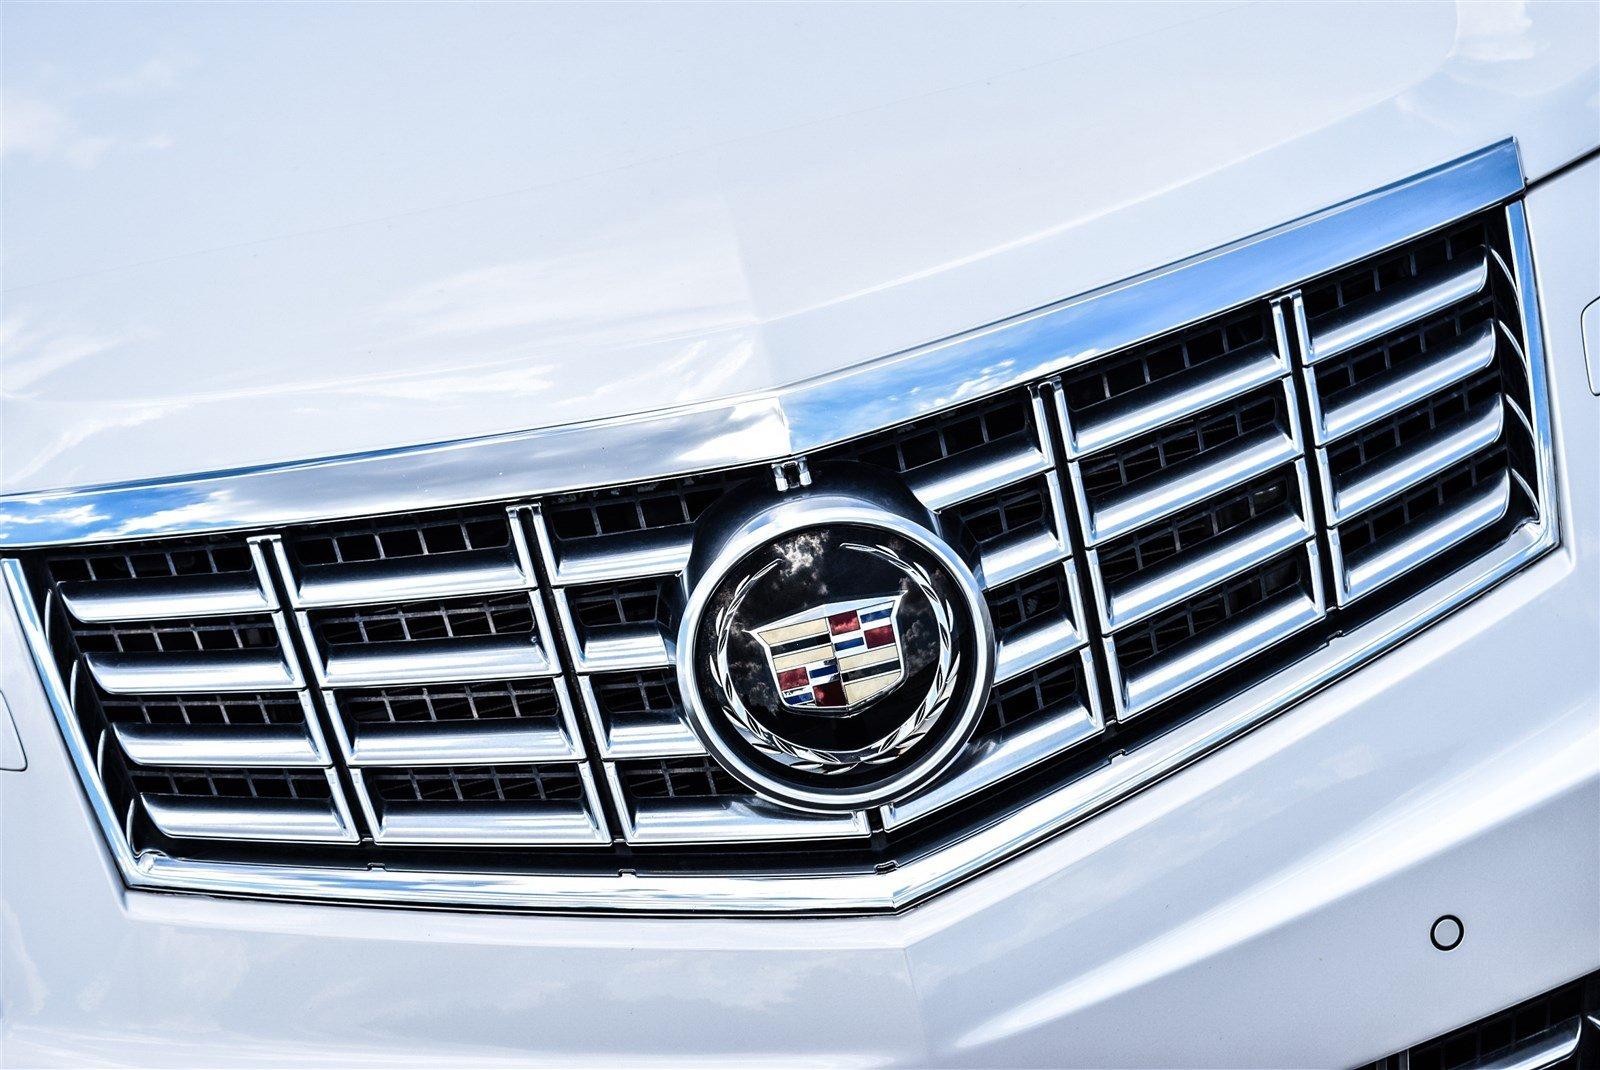 Used 2014 Cadillac SRX Premium Collection for sale Sold at Gravity Autos Marietta in Marietta GA 30060 8